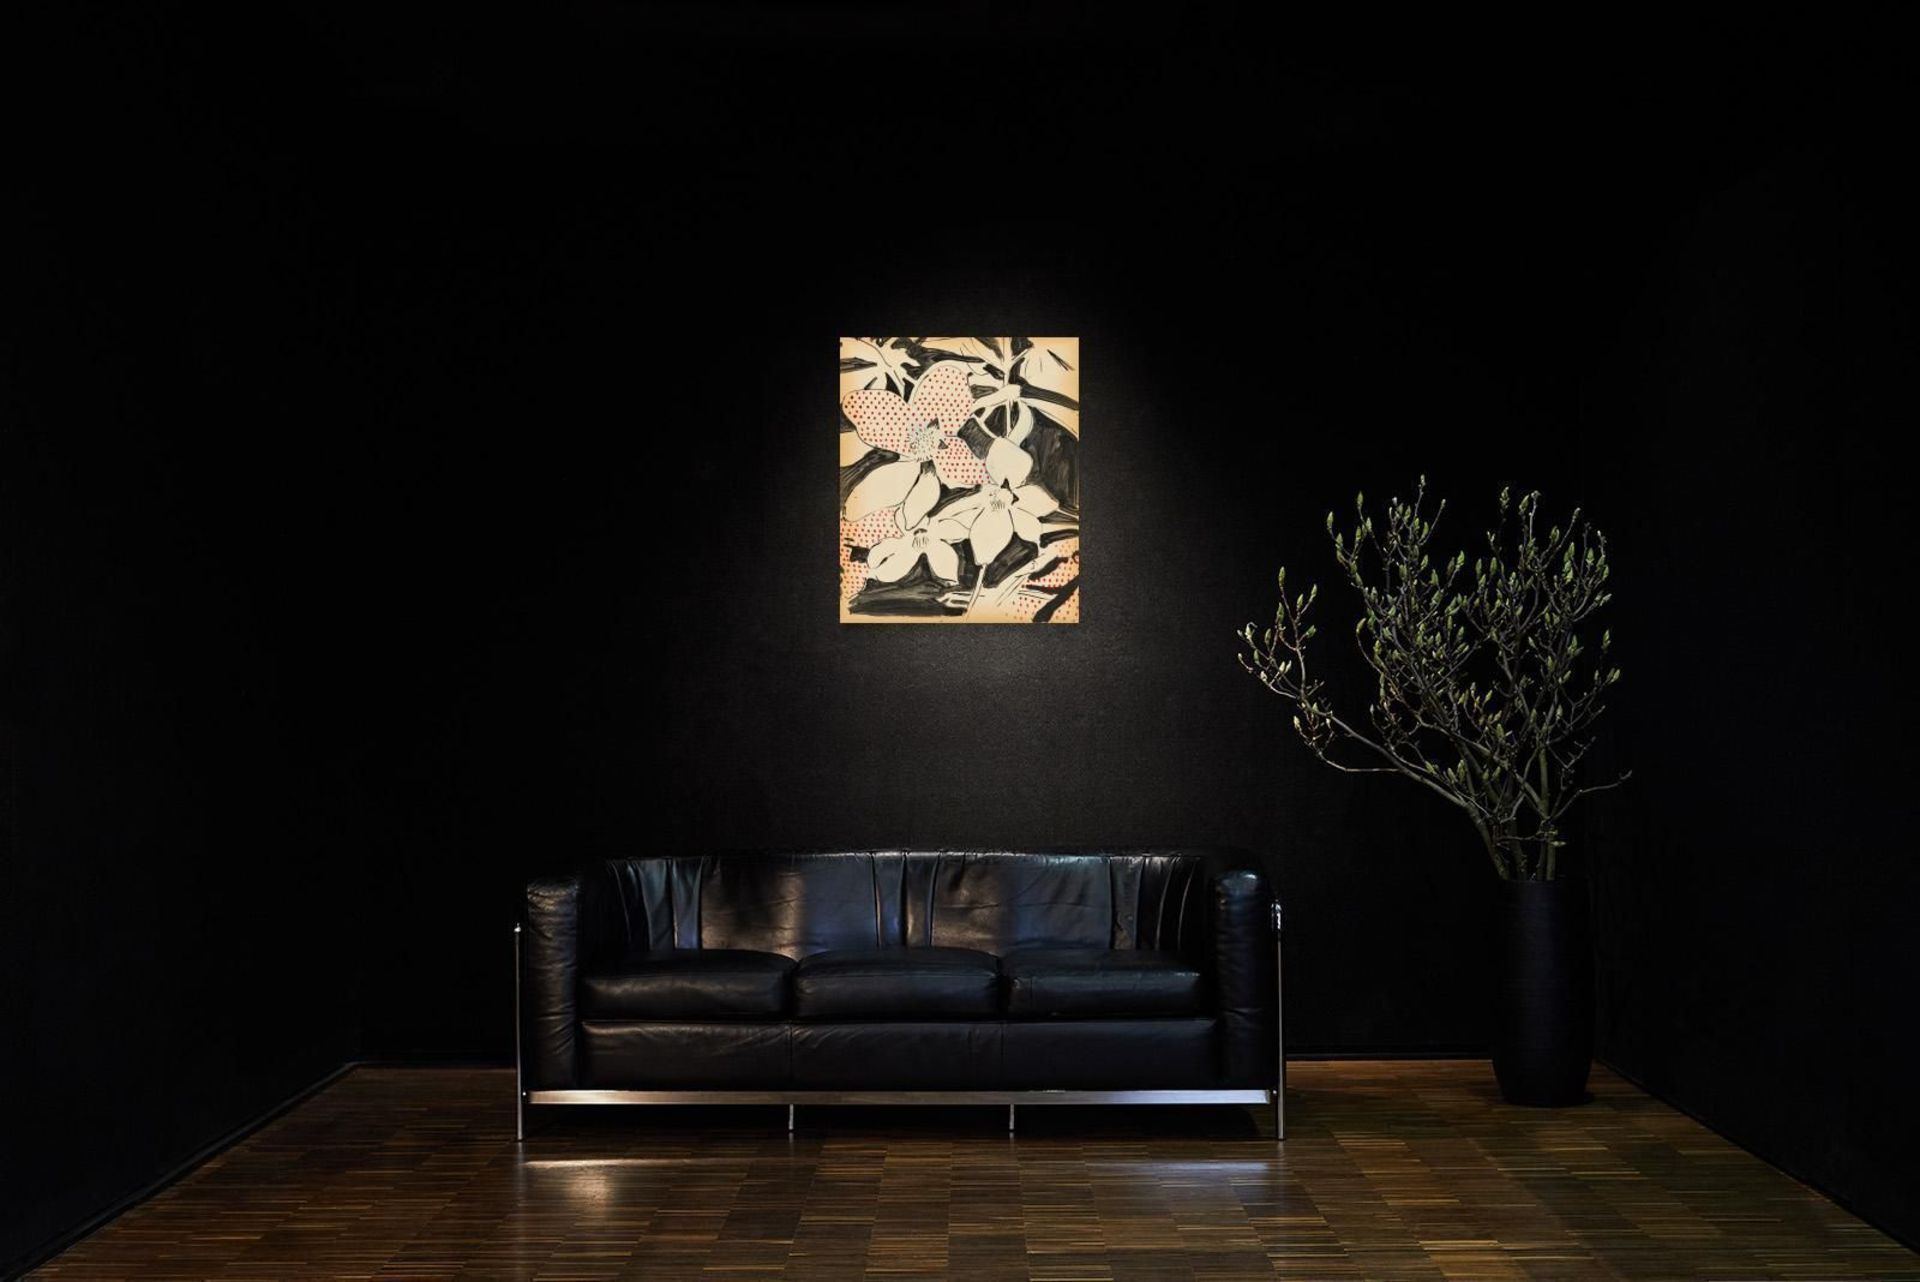 Sigmar Polke: Untitled (Blumen) - Image 3 of 3